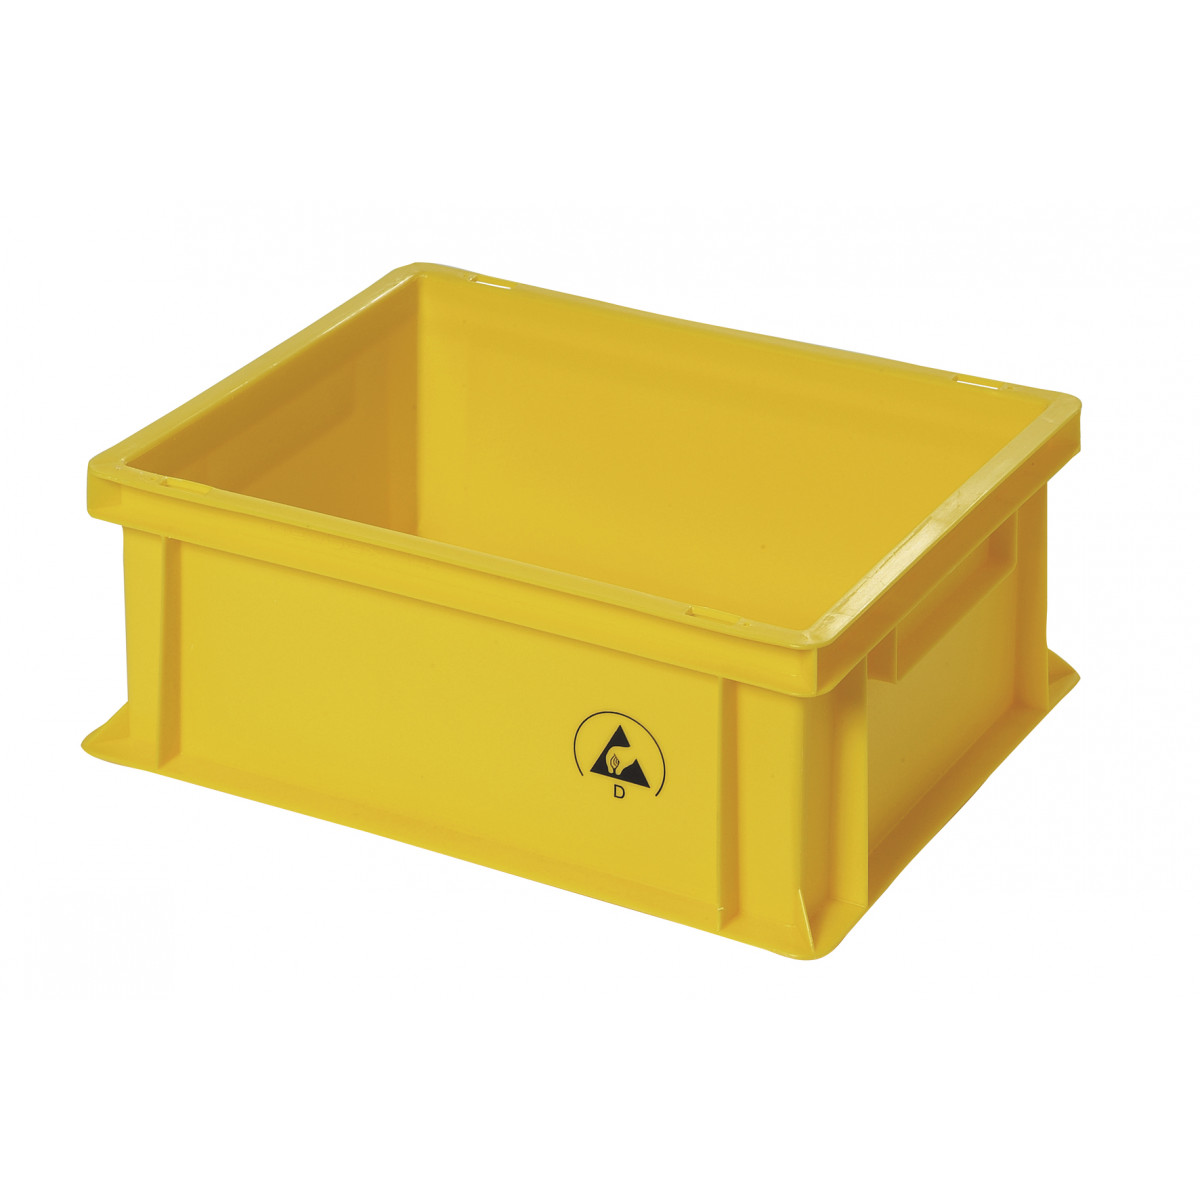 EURO storage container yellow